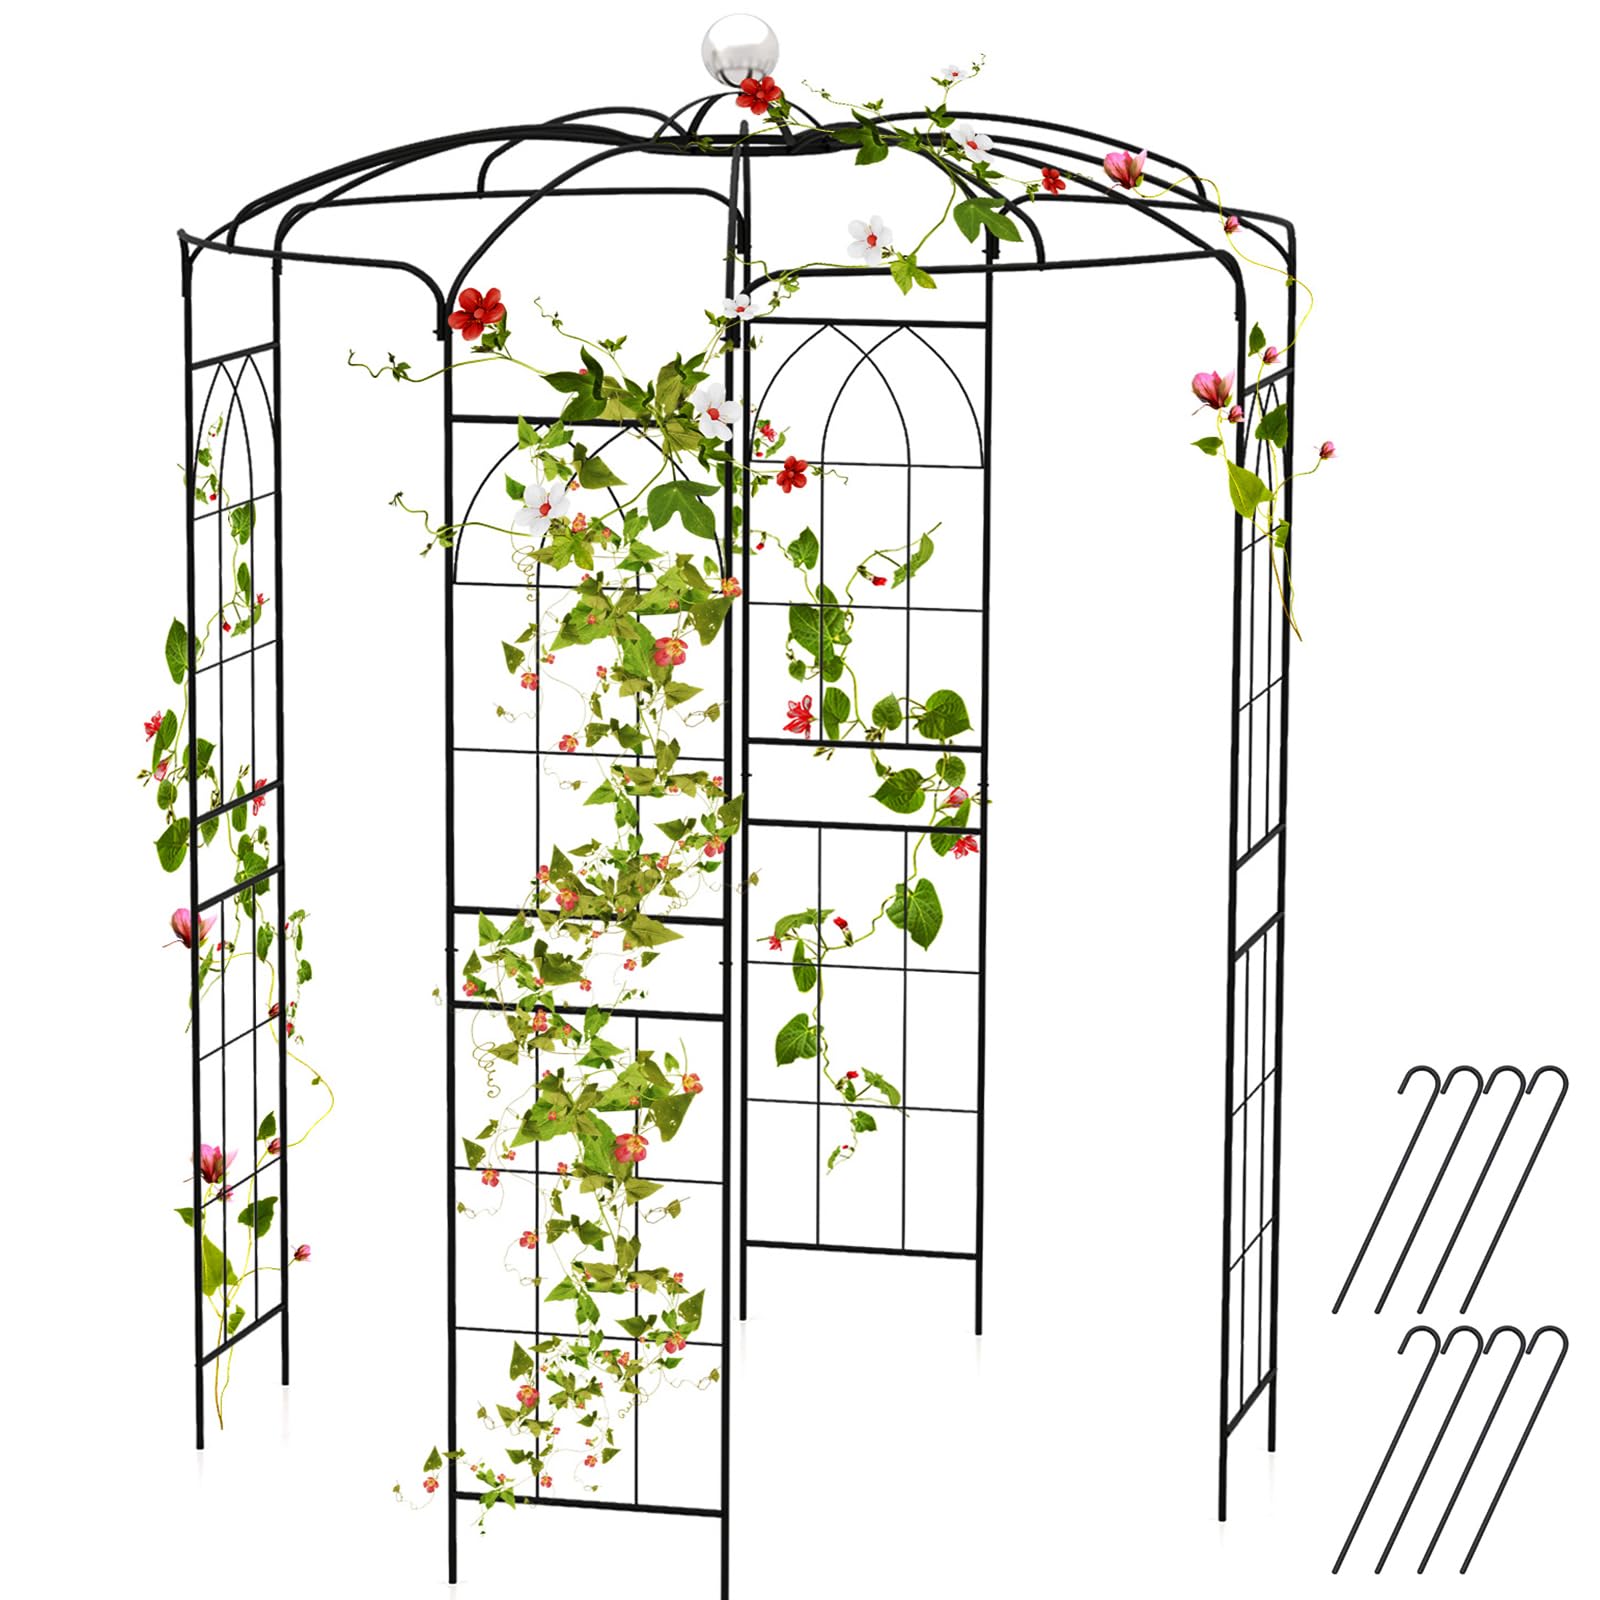 Giantex Birdcage Shape Gazebo - 9.4' H x 6.8' W Metal Arch Trellis for Climbing Plants Clematis Vines